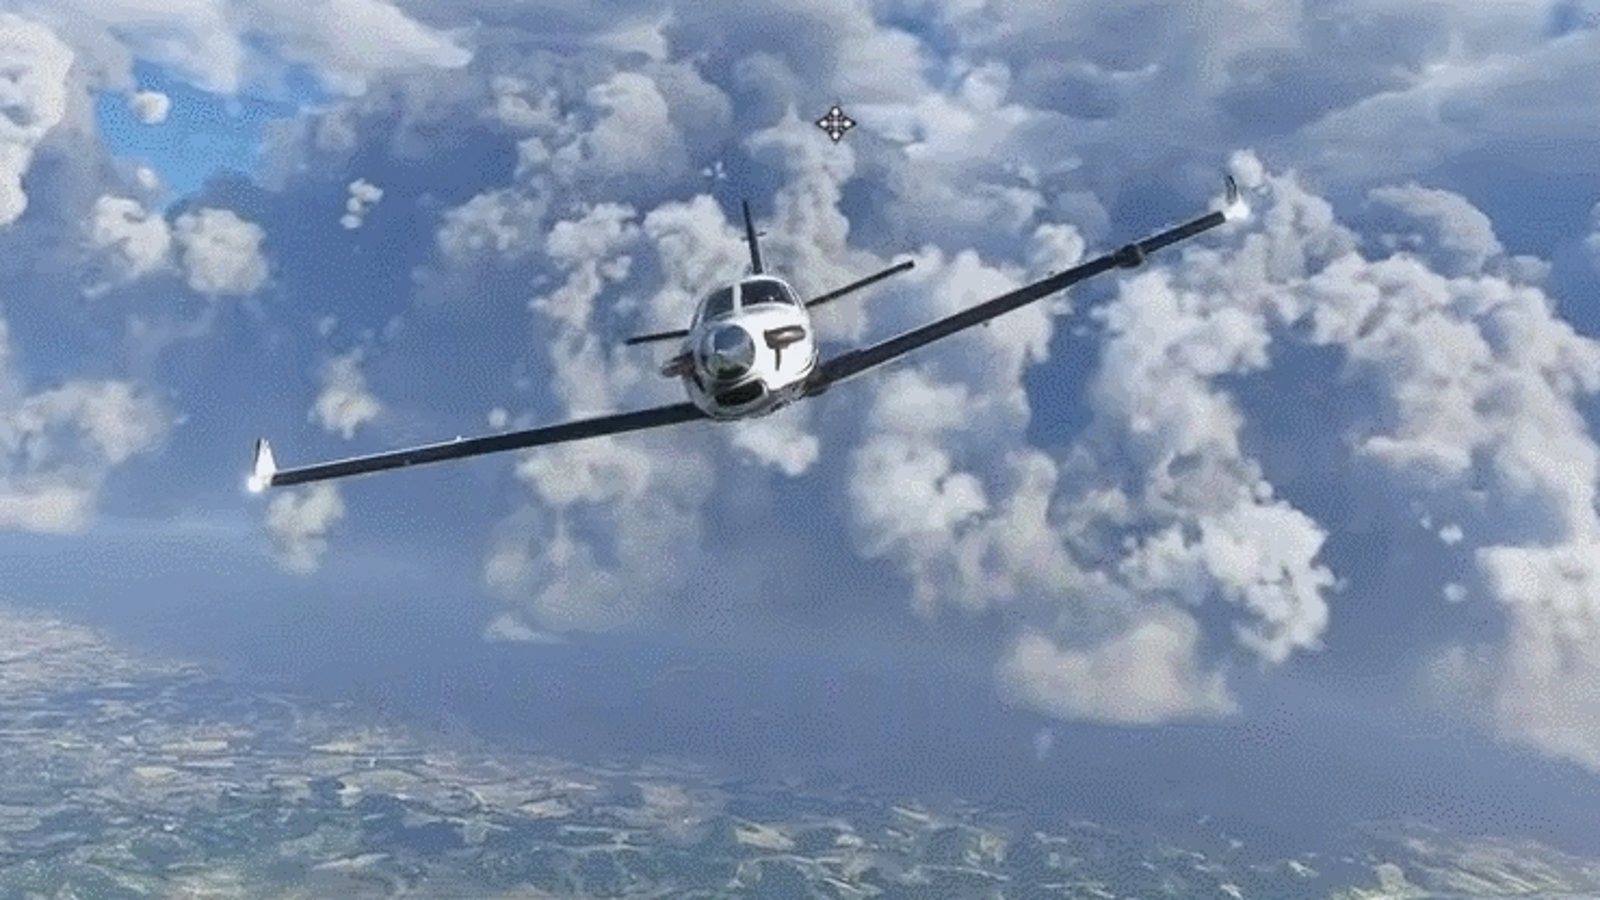 Microsoft Flight Simulator - Official Gameplay Trailer